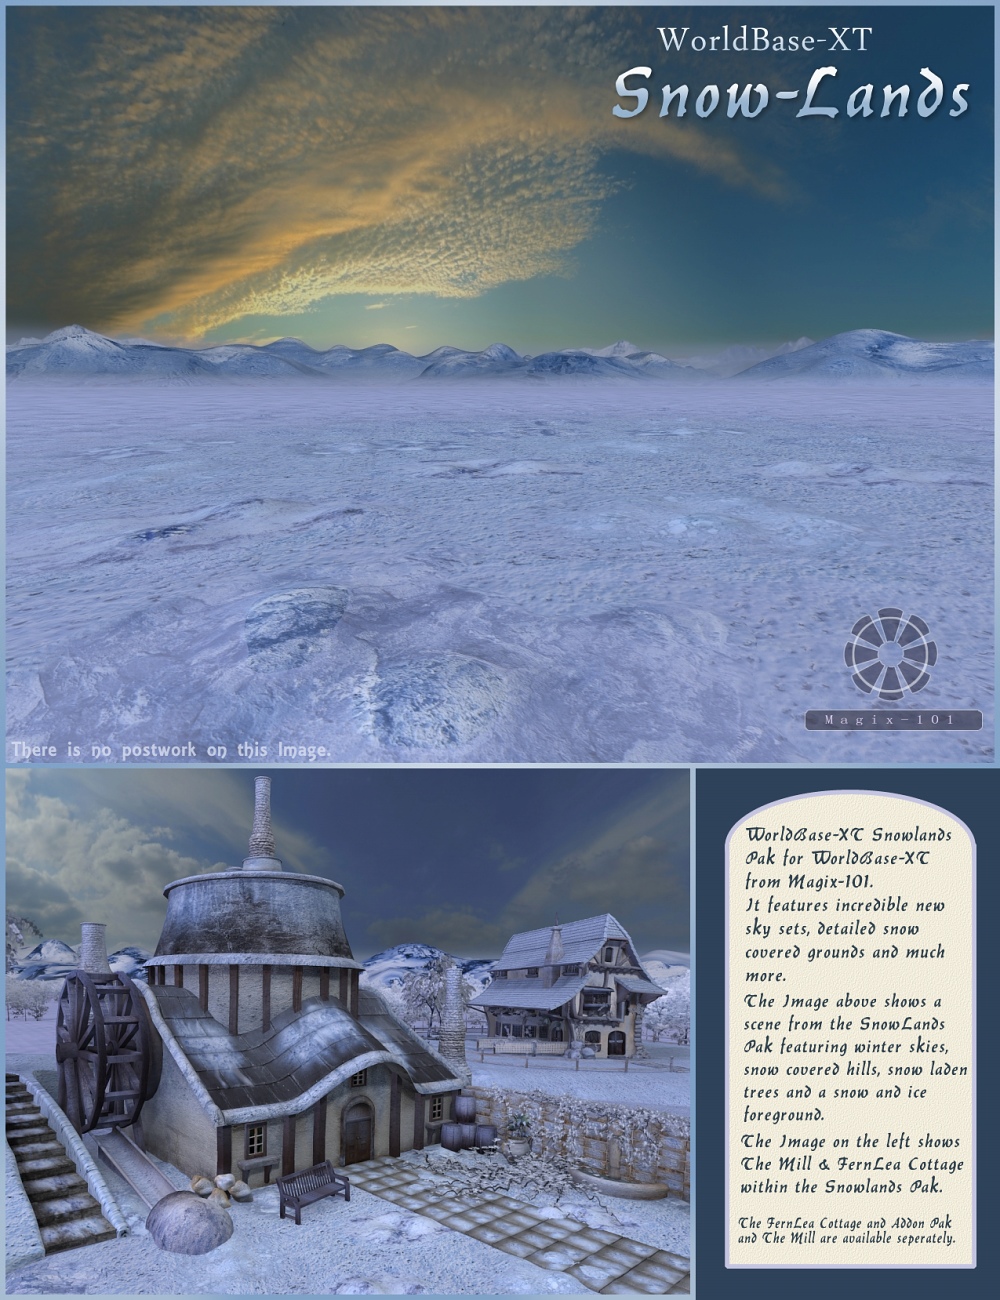 Snowlands Pak for WorldBase XT by: Magix 101, 3D Models by Daz 3D